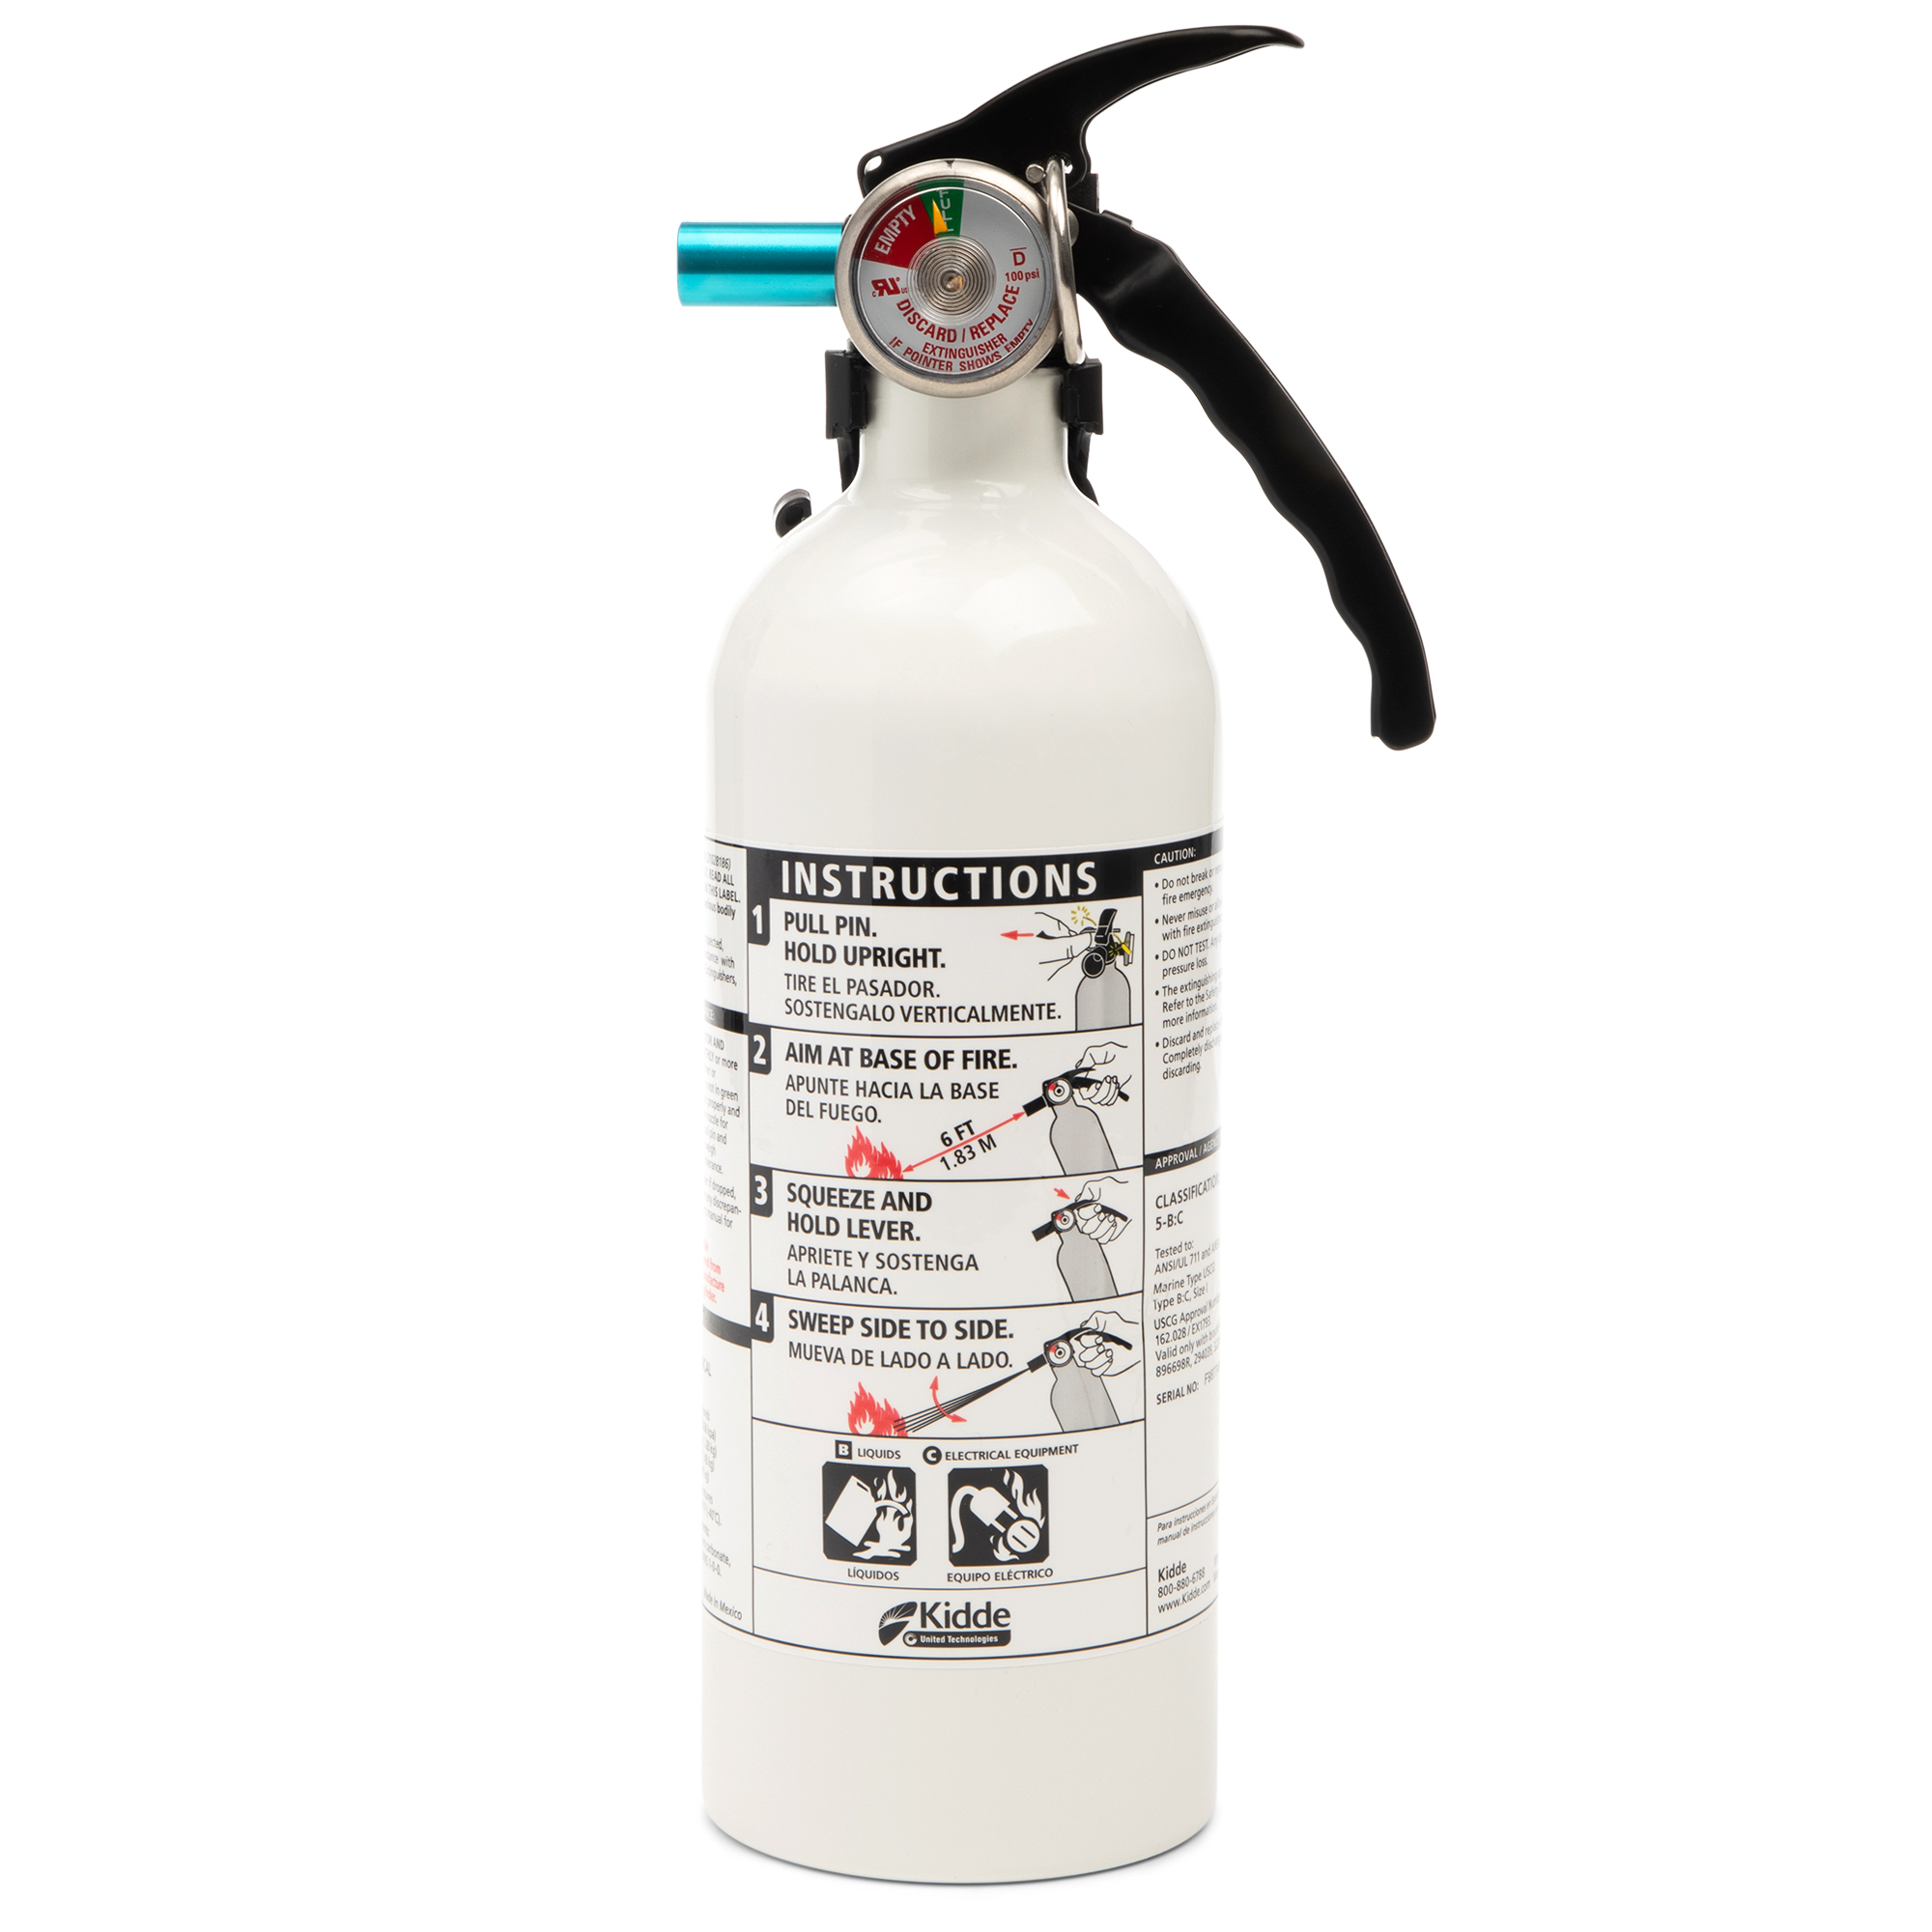 Kidde 5BC Fire Extinguisher, Model KD61W-5BC KD61W-5BC - image 5 of 14